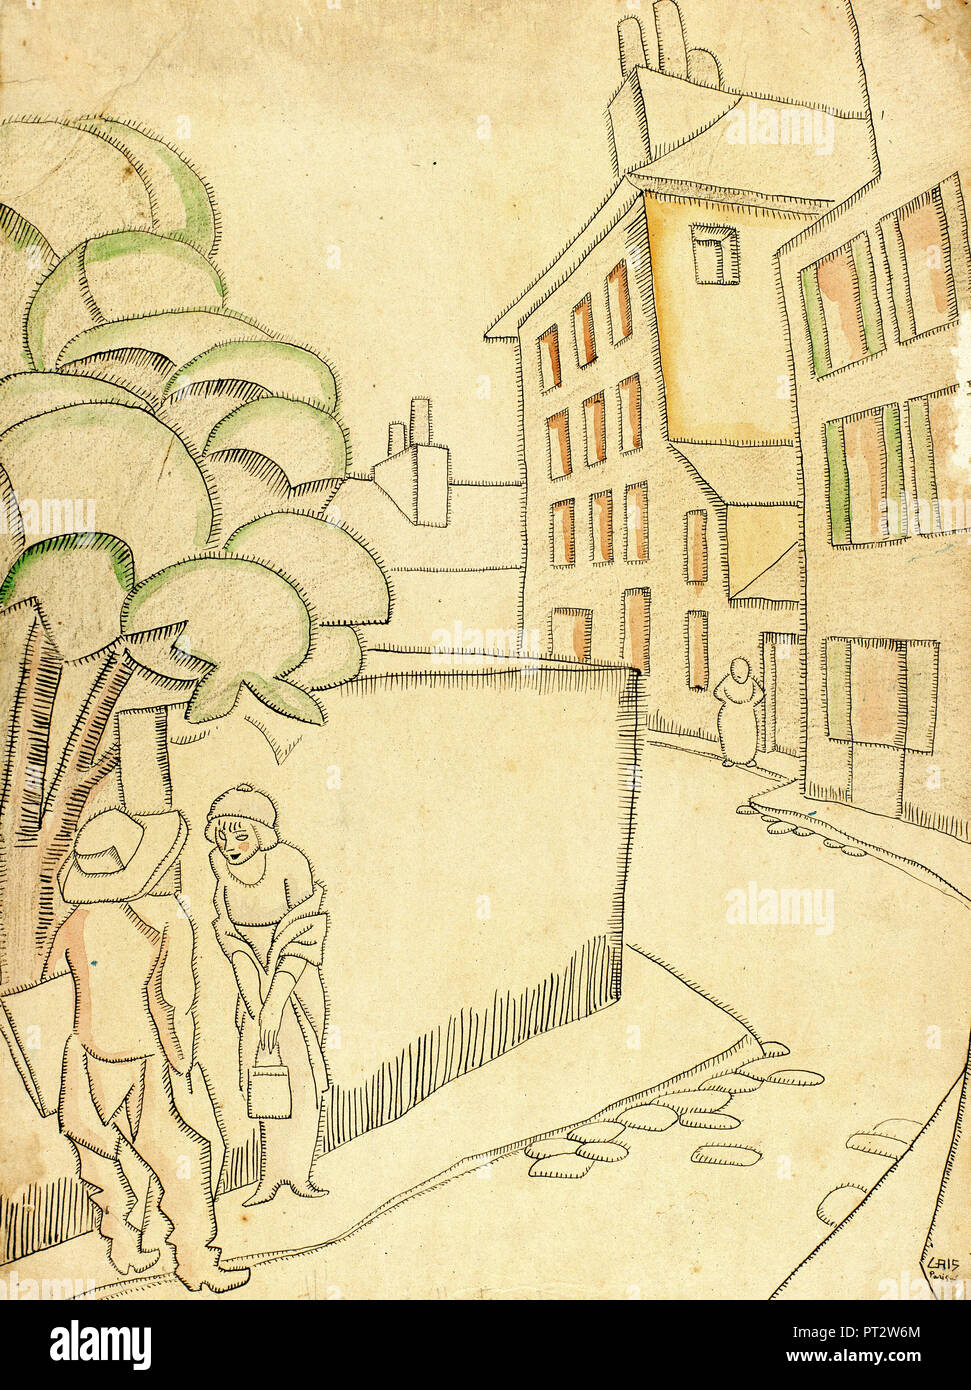 Juan Gris, A Street in Montmartre 1911 Pen and ink, watercolor and charcoal on paper, Museu Nacional d'Art de Catalunya, Barcelona, Spain. Stock Photo